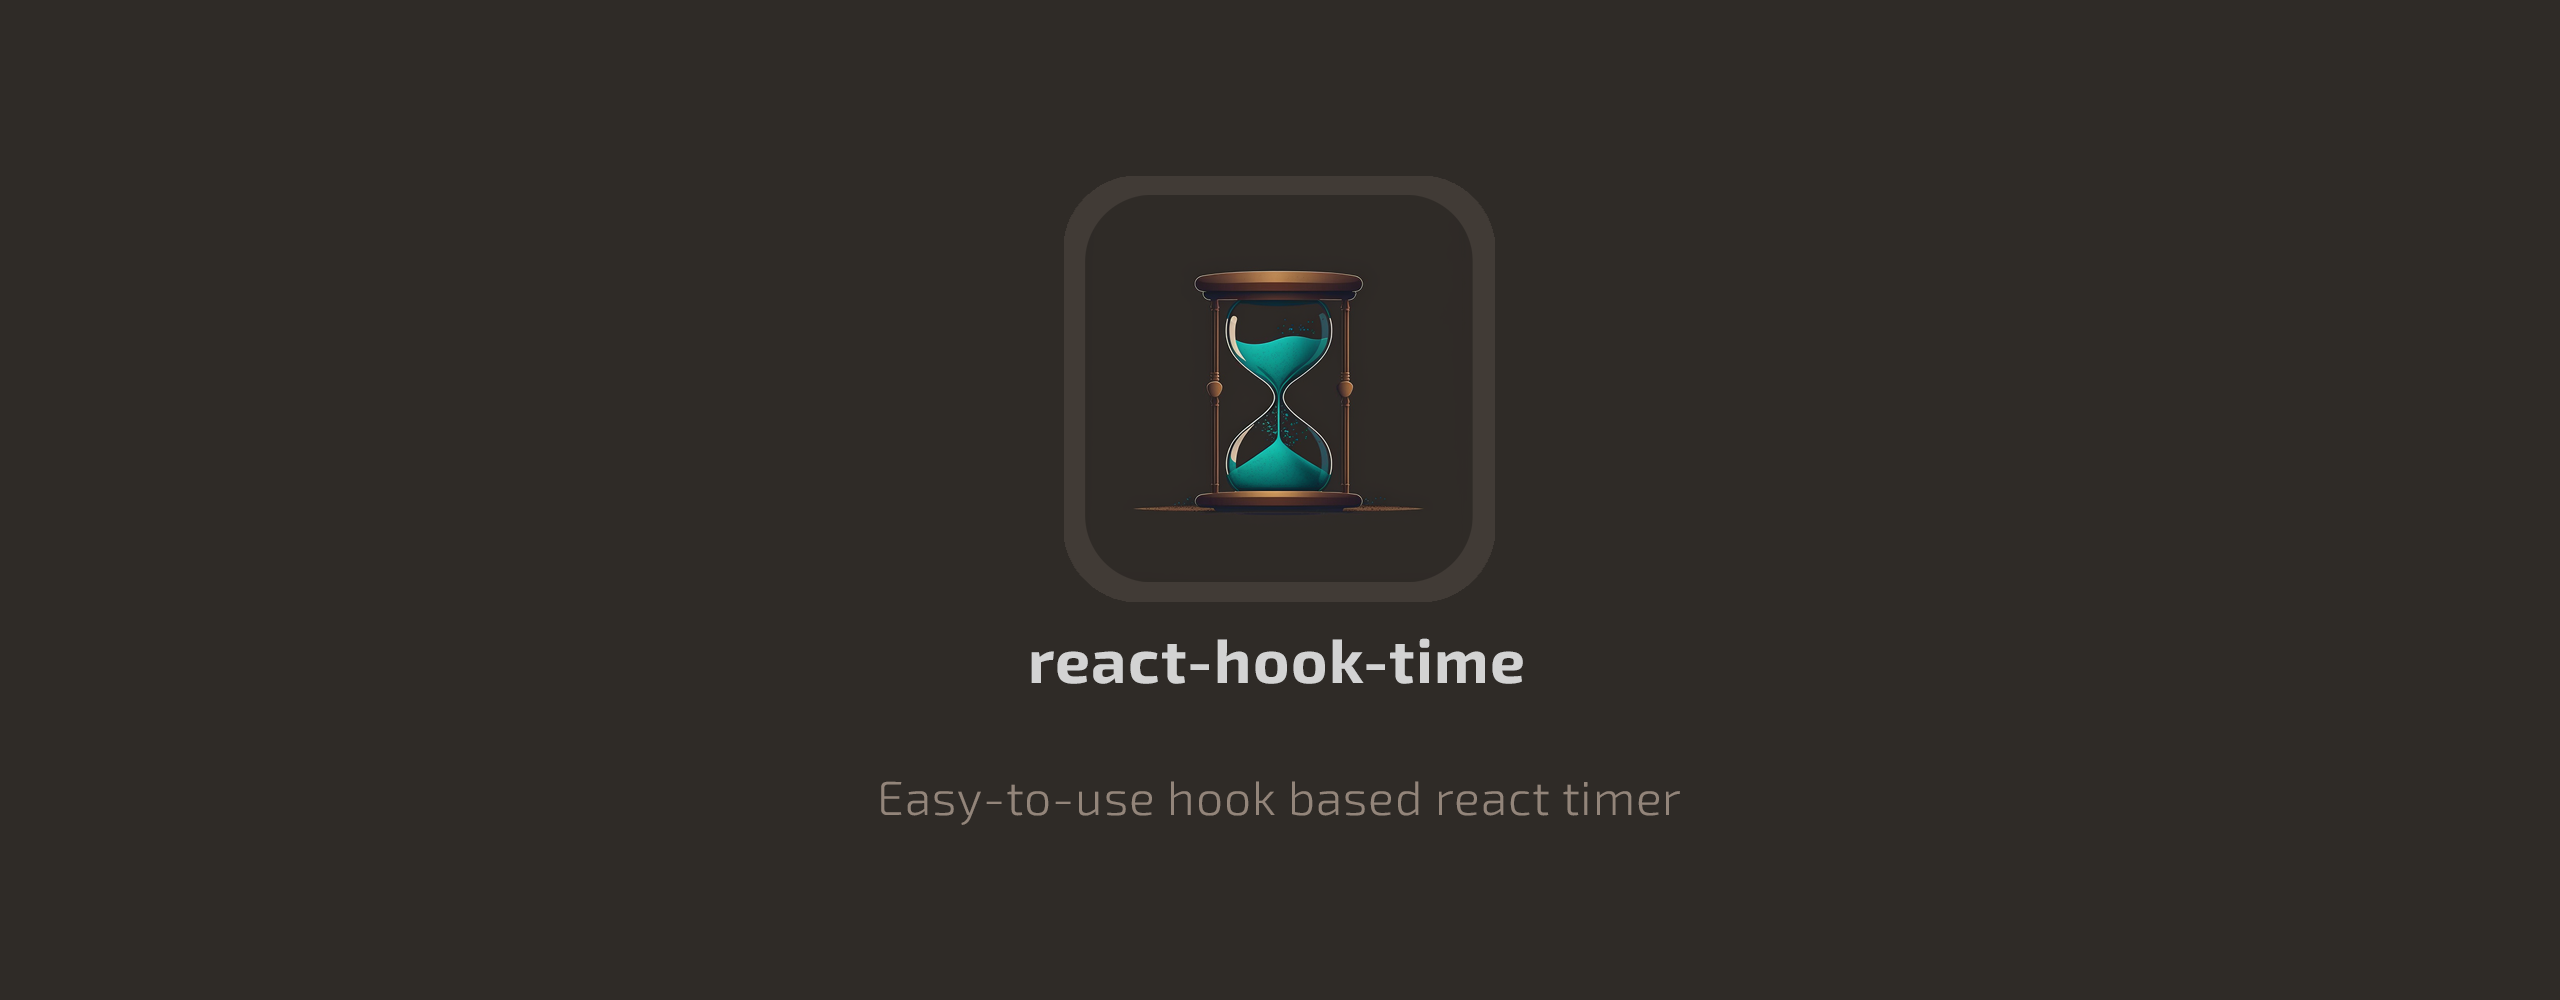 react-hook-time